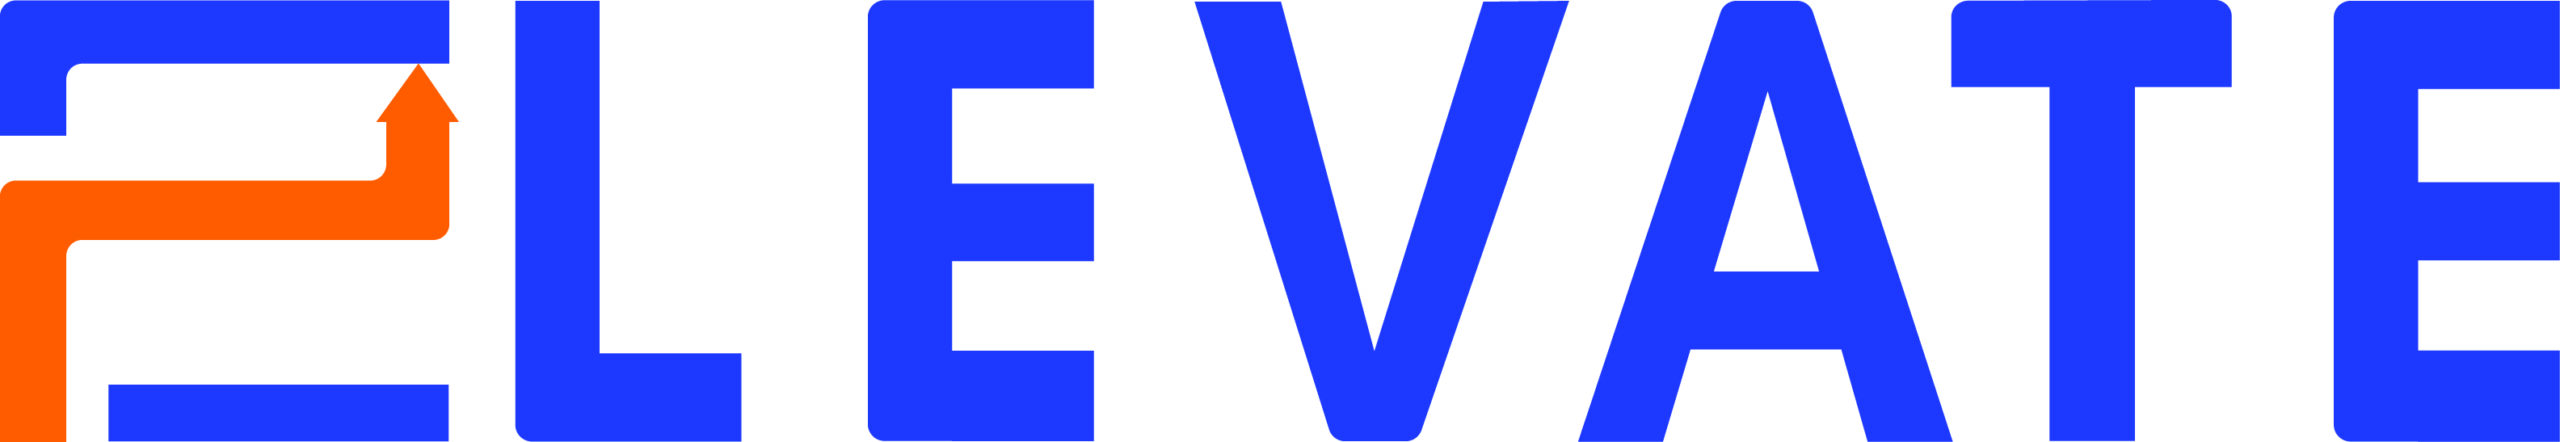 Eleveate Performance Group logo